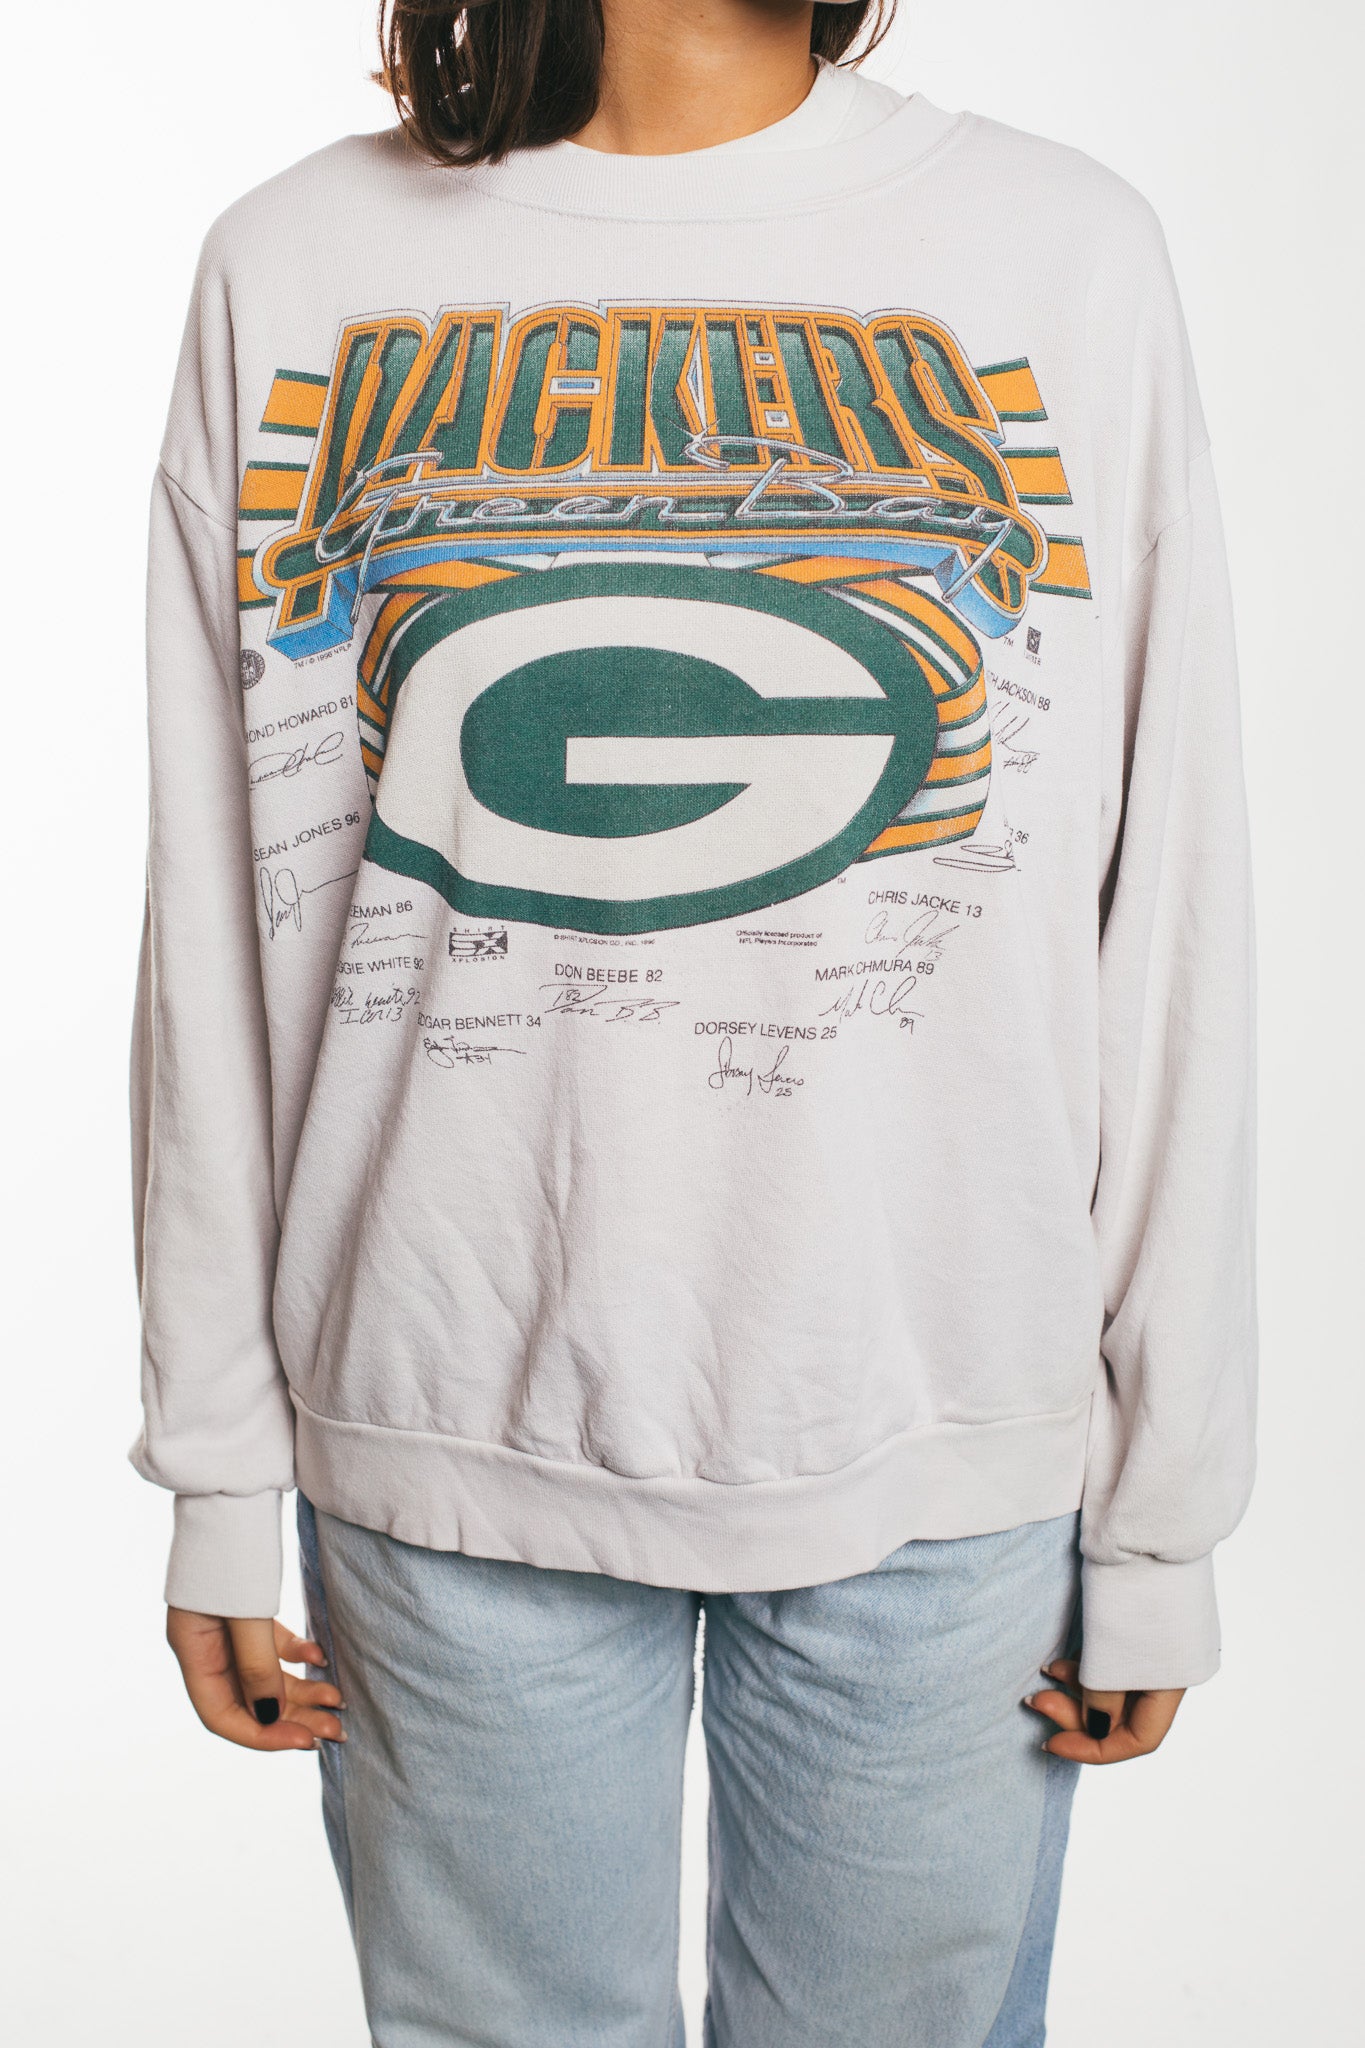 Packers - Sweatshirt